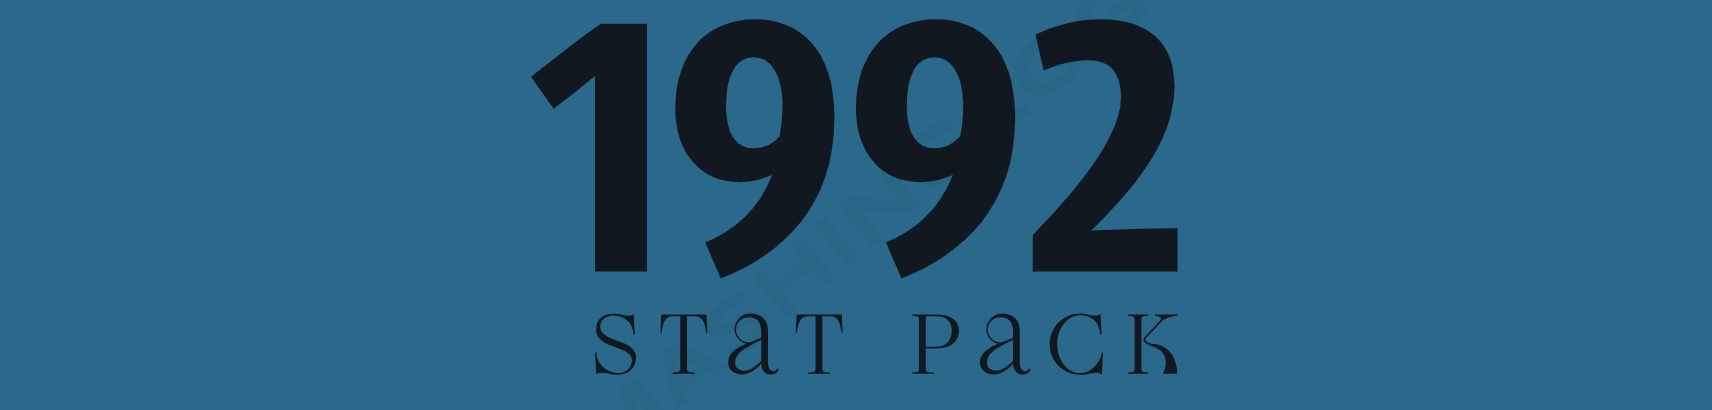 1992 Stat Pack